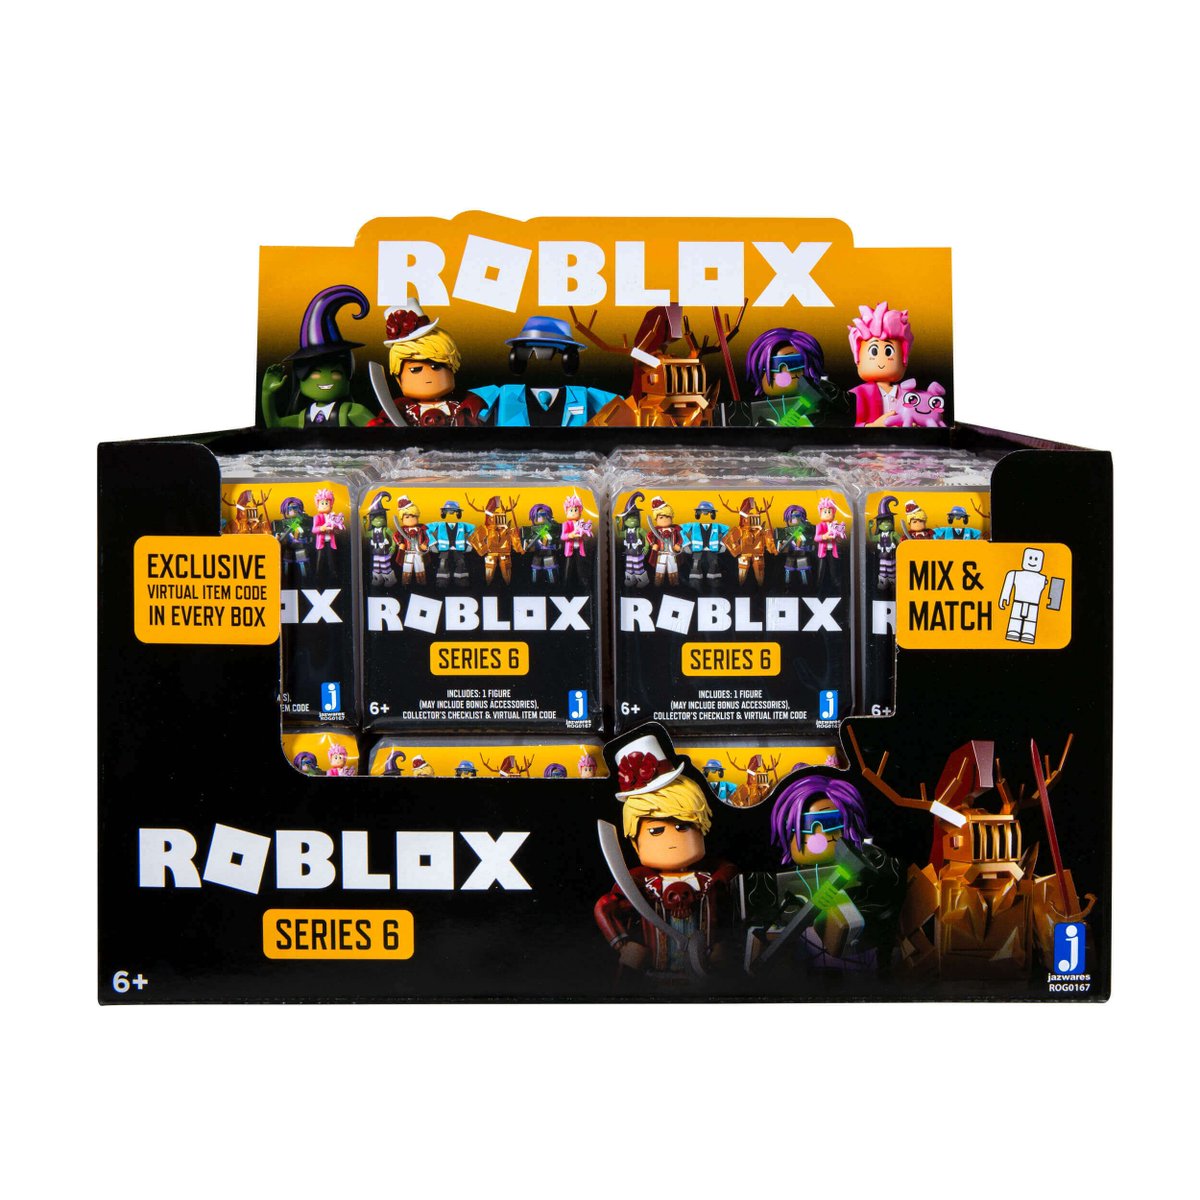 Foursci On Twitter Robloxtoys Celebrity Series 5 Diamond Boxes - roblox toys series 5 checklist